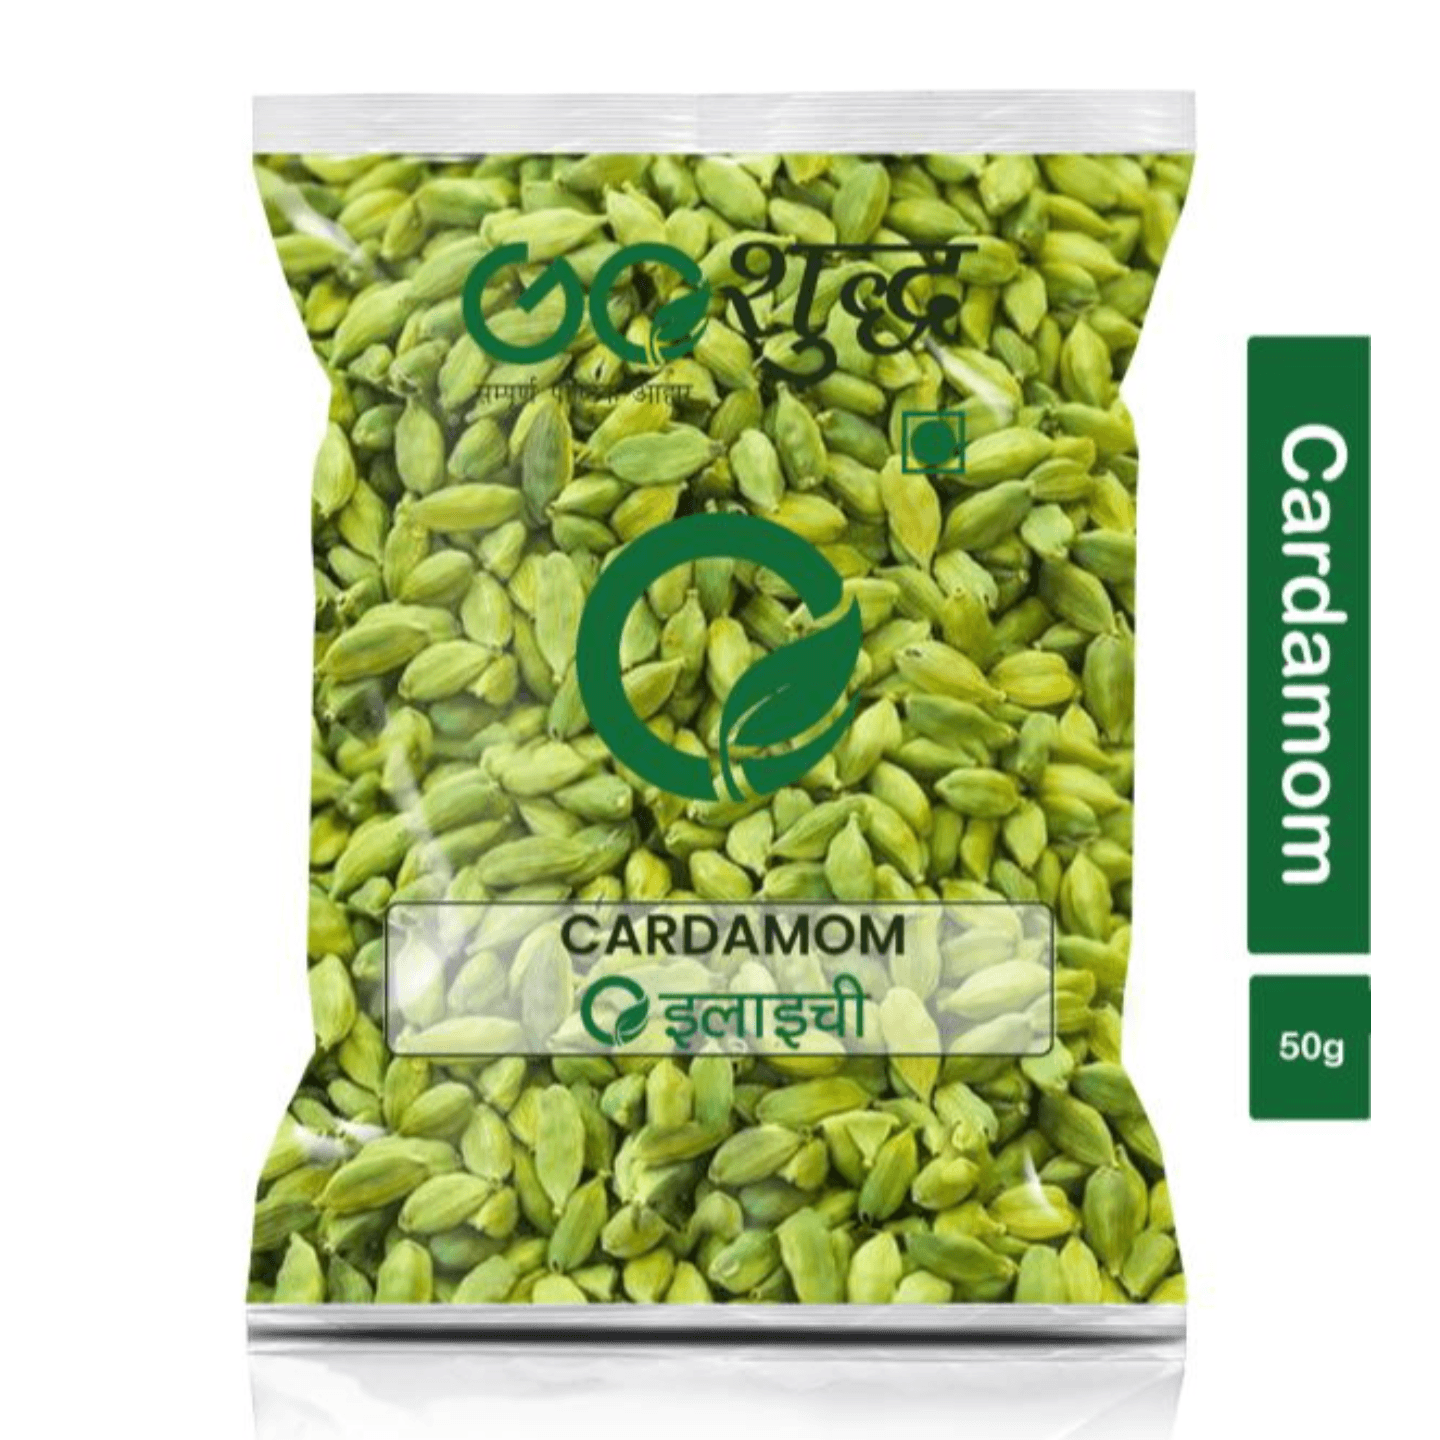 Goshudh Best Quality Elaichi -50gm Pack Of 1 Green Cardamom 50 g